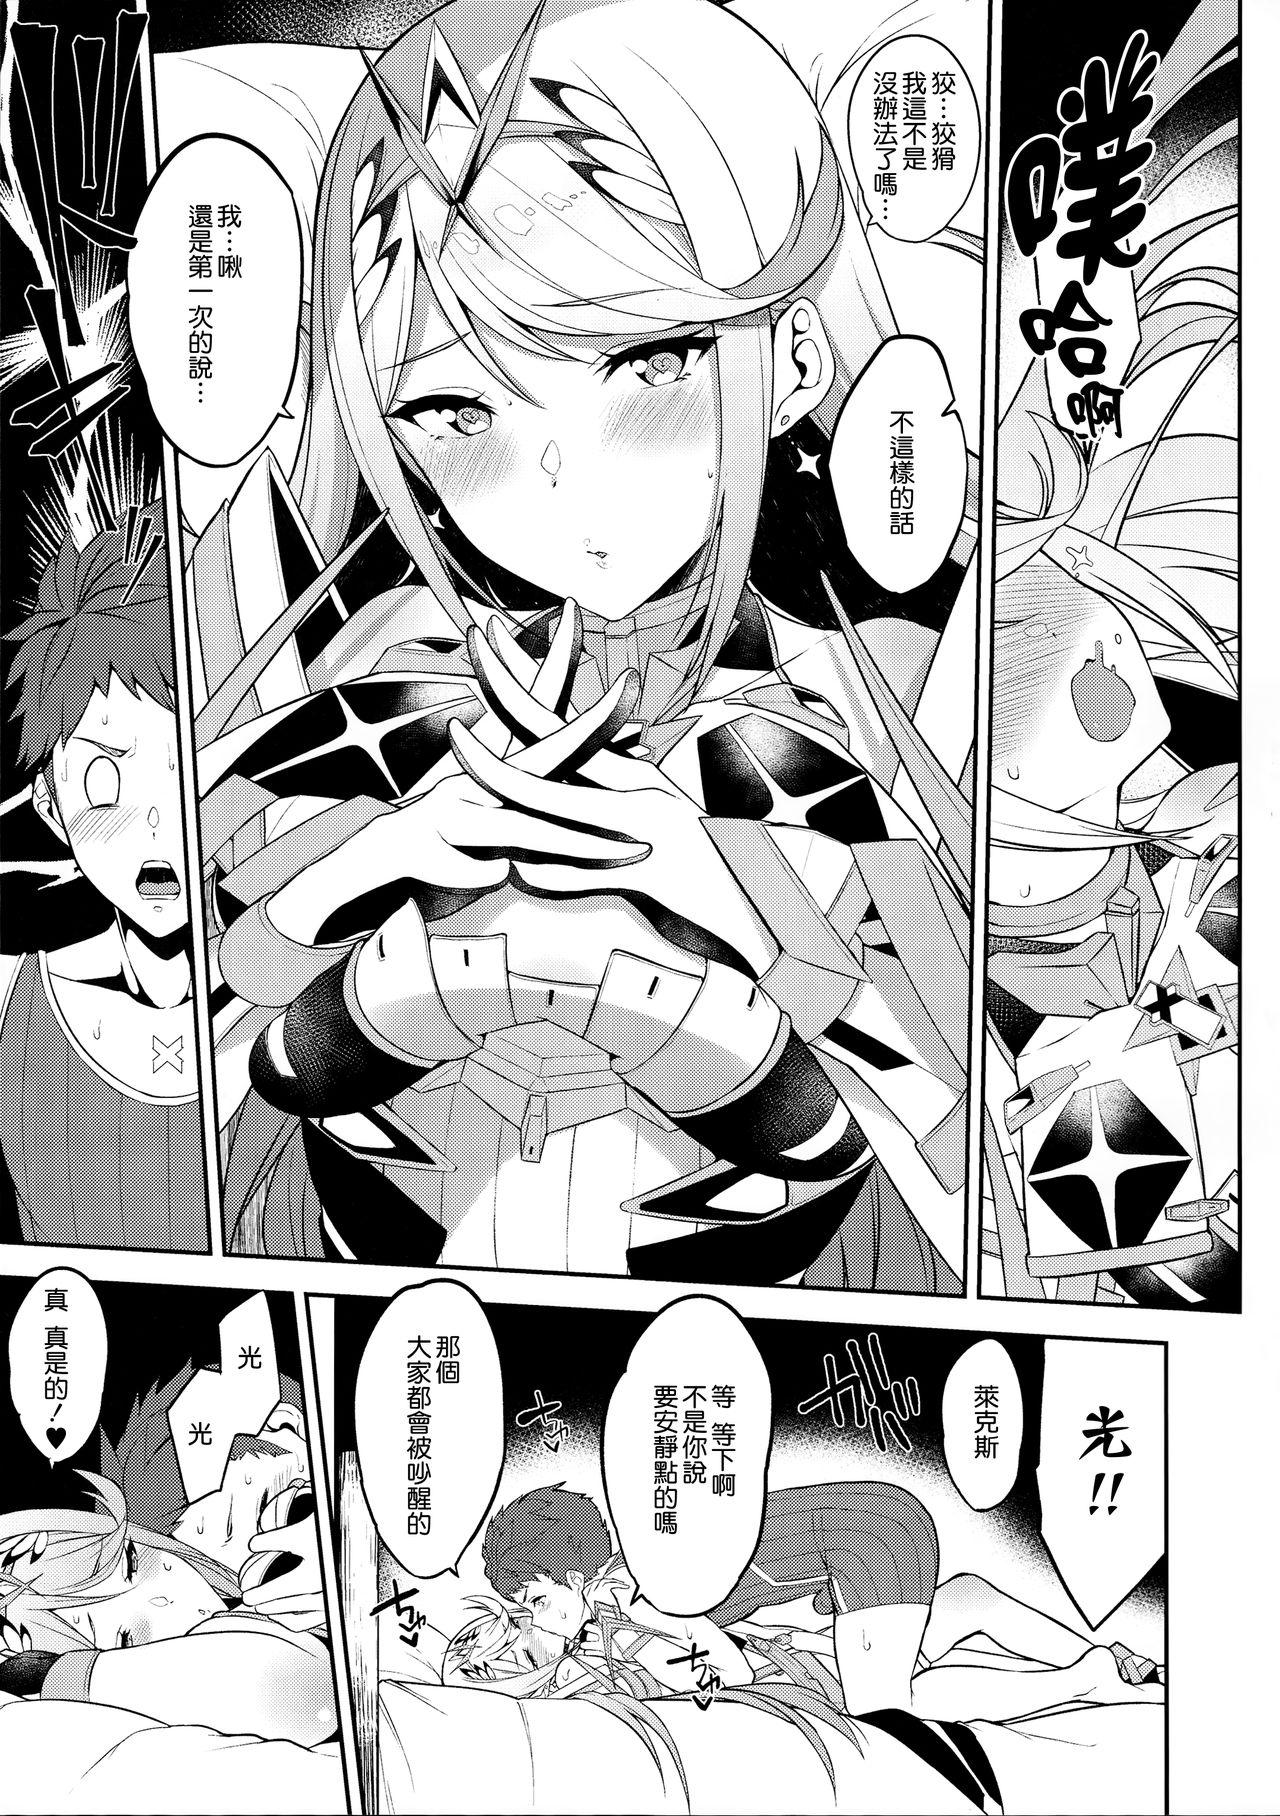 Behind Hikari Are - Xenoblade chronicles 2 Masturbating - Page 9